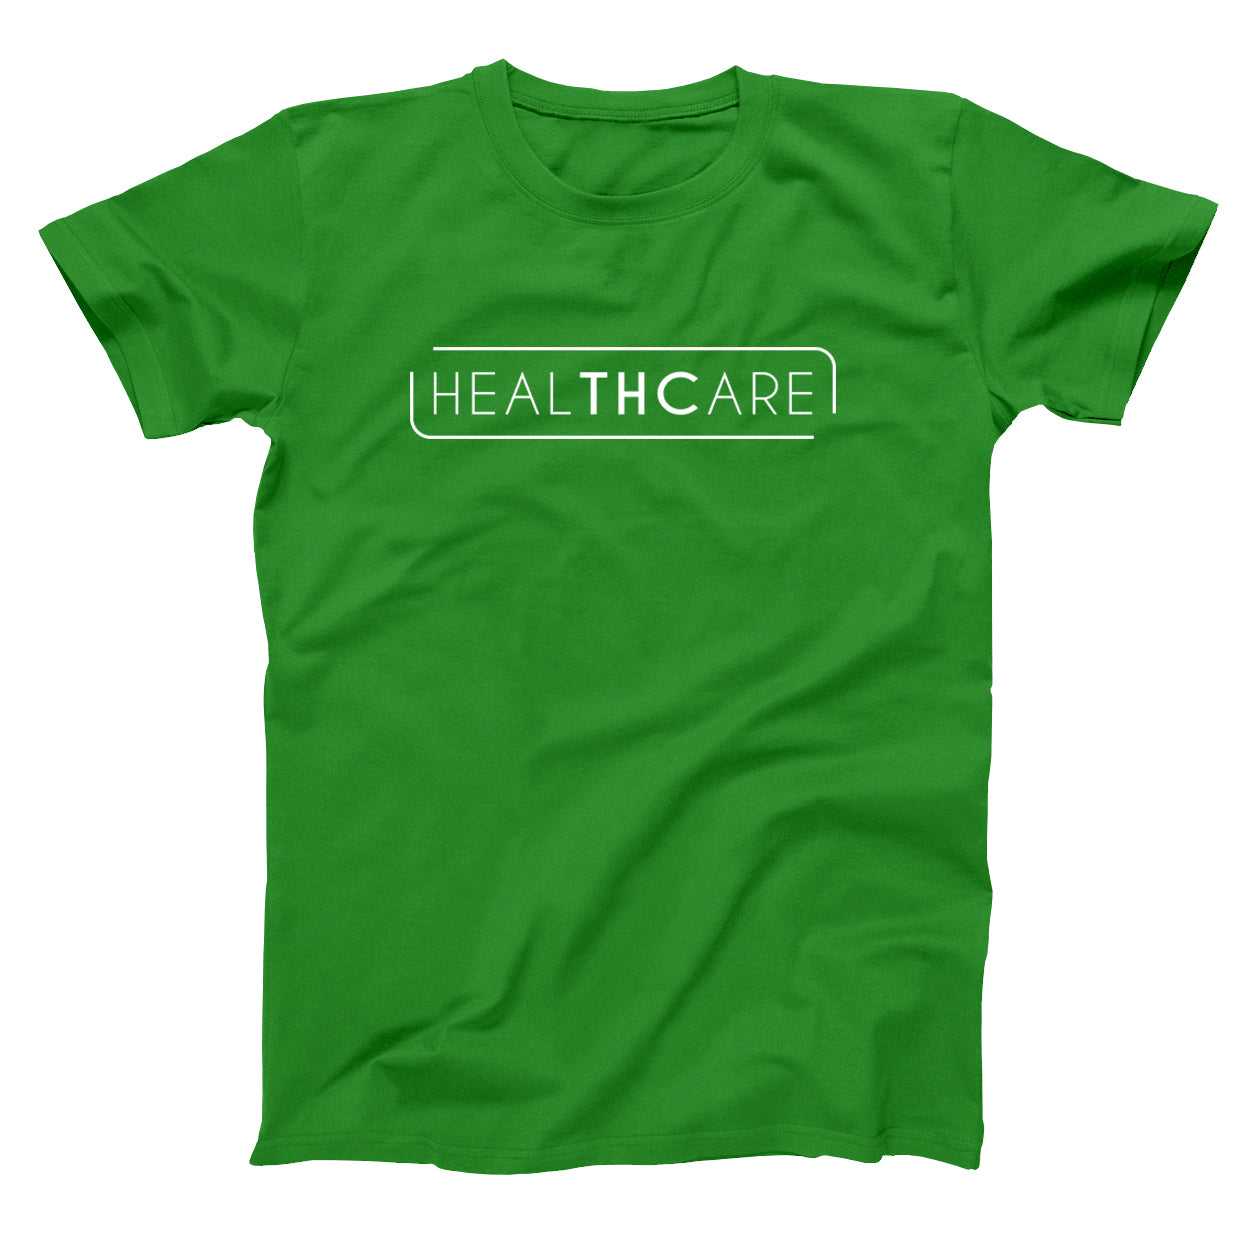 healTHCare Tshirt - Donkey Tees